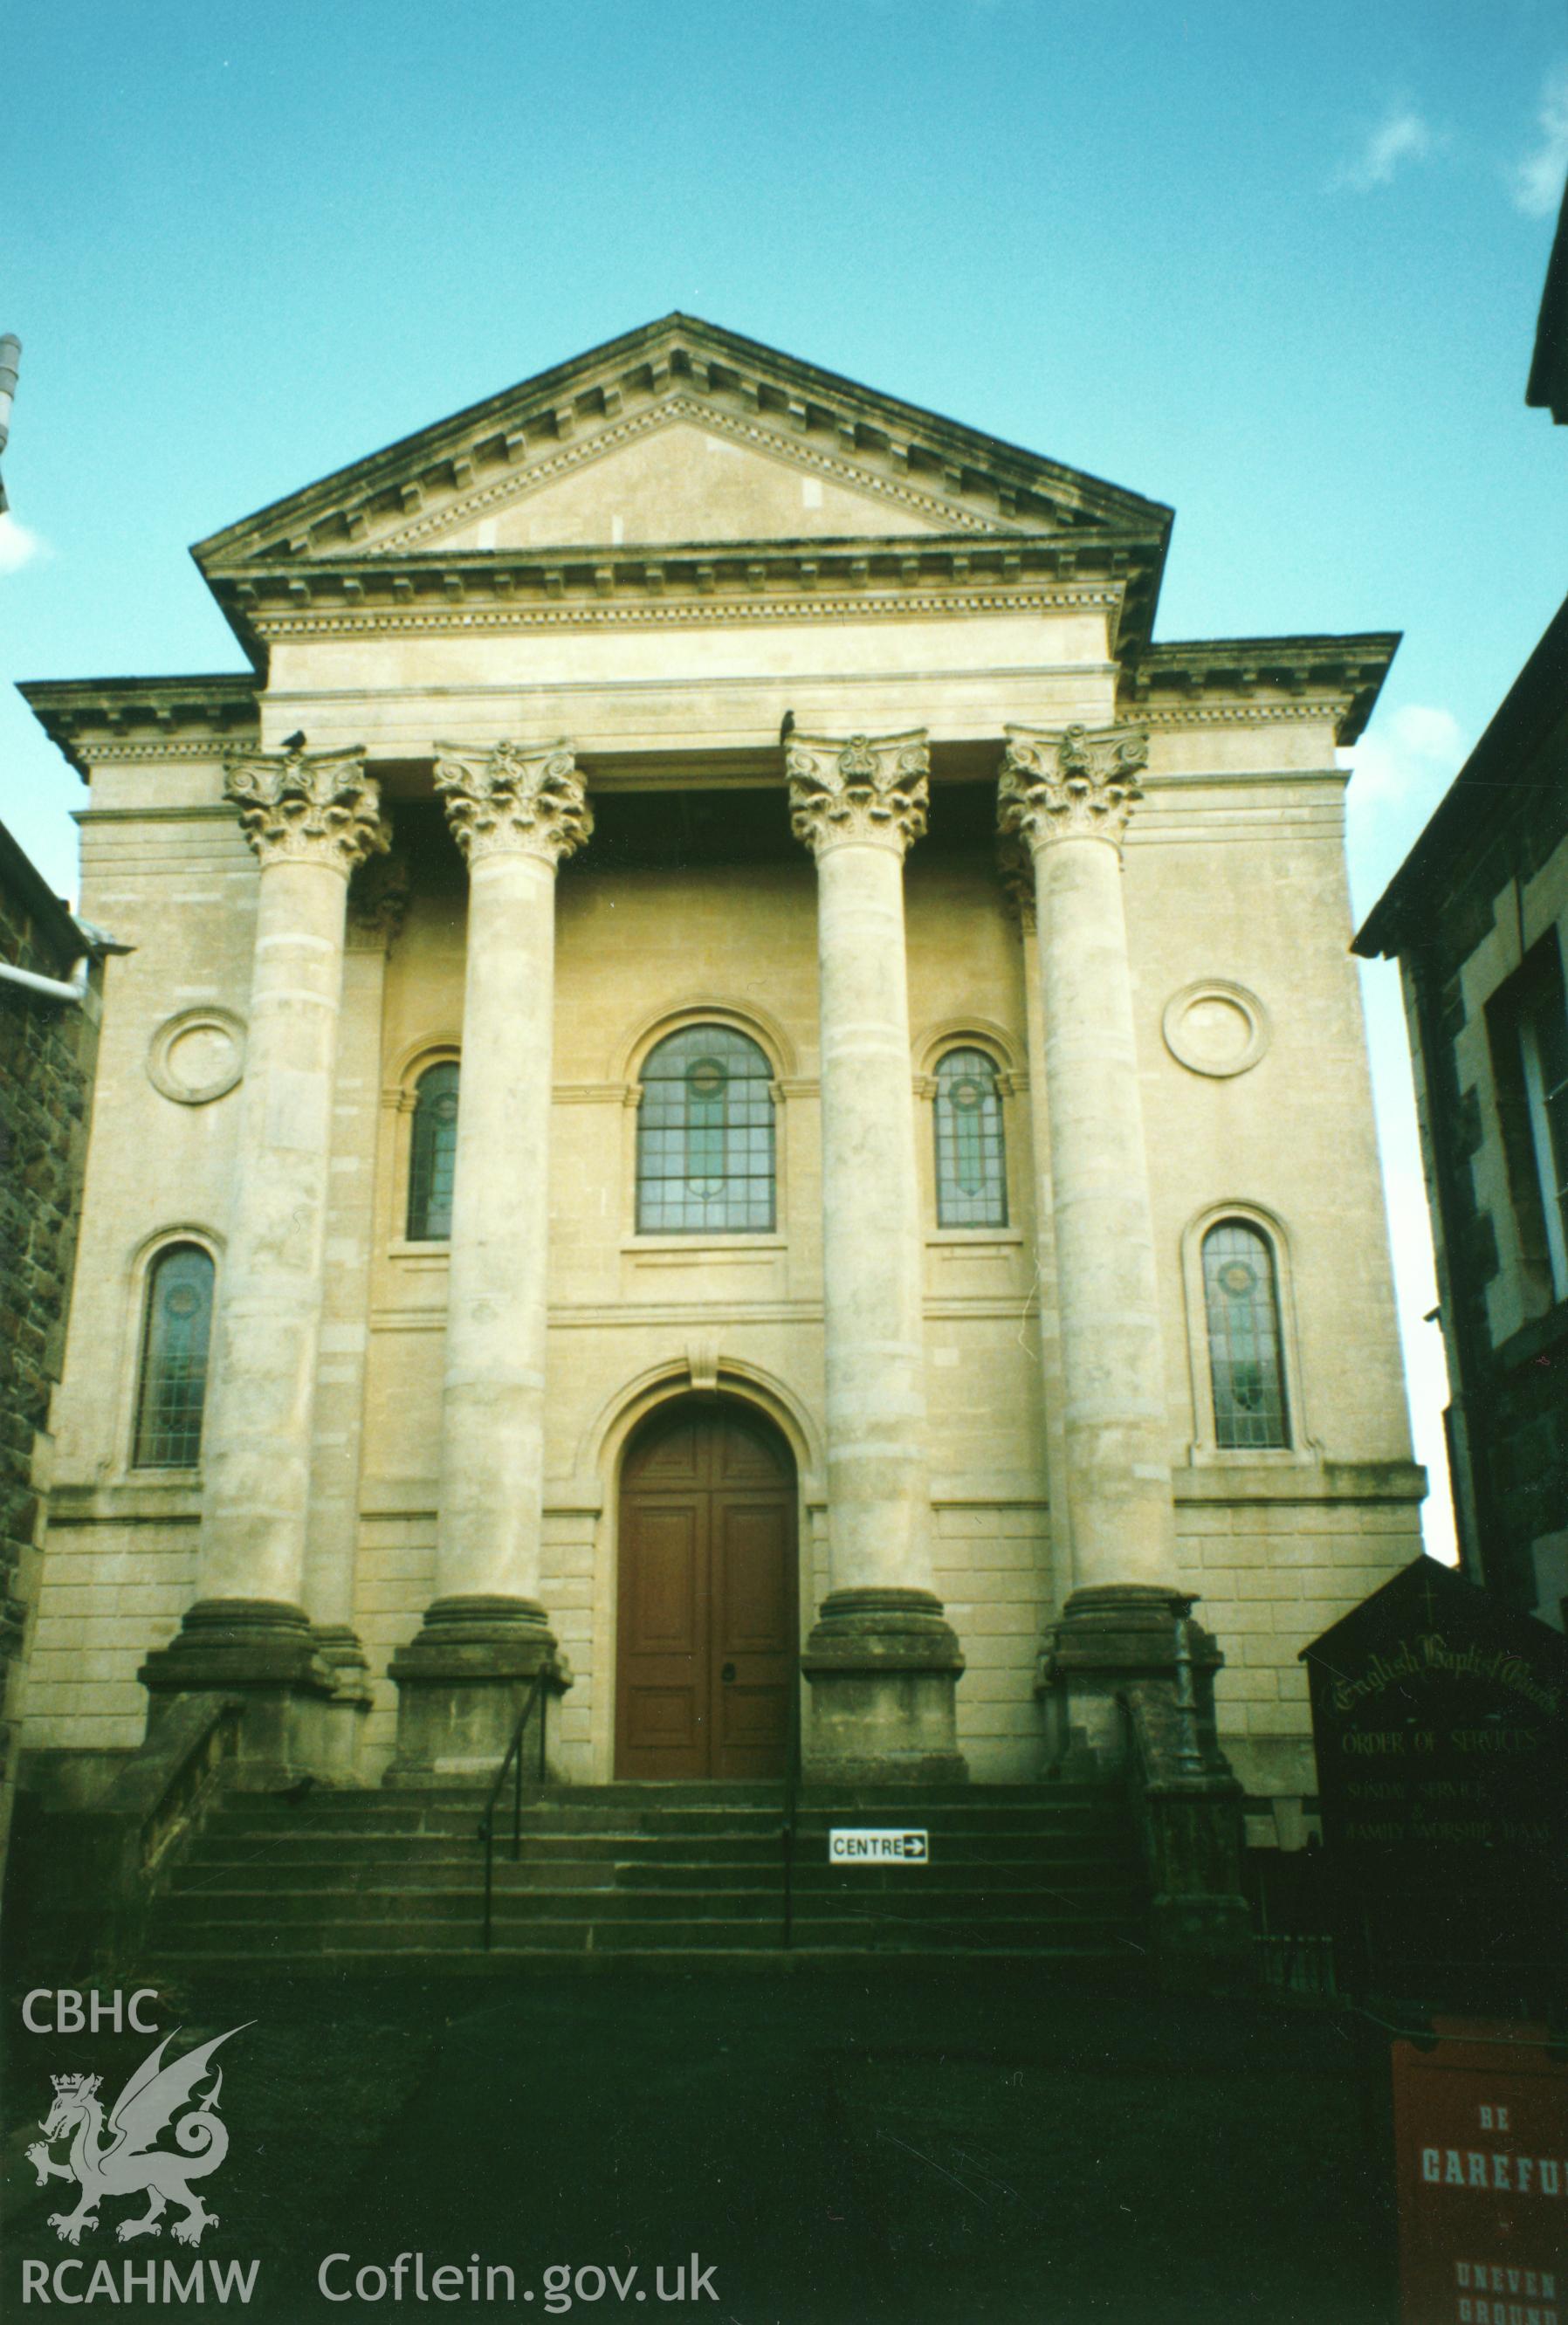 Digital copy of a colour photograph showing an exterior view of English Baptist Church, Lammas Street, Carmarthen, taken by Robert Scourfield, 1996.